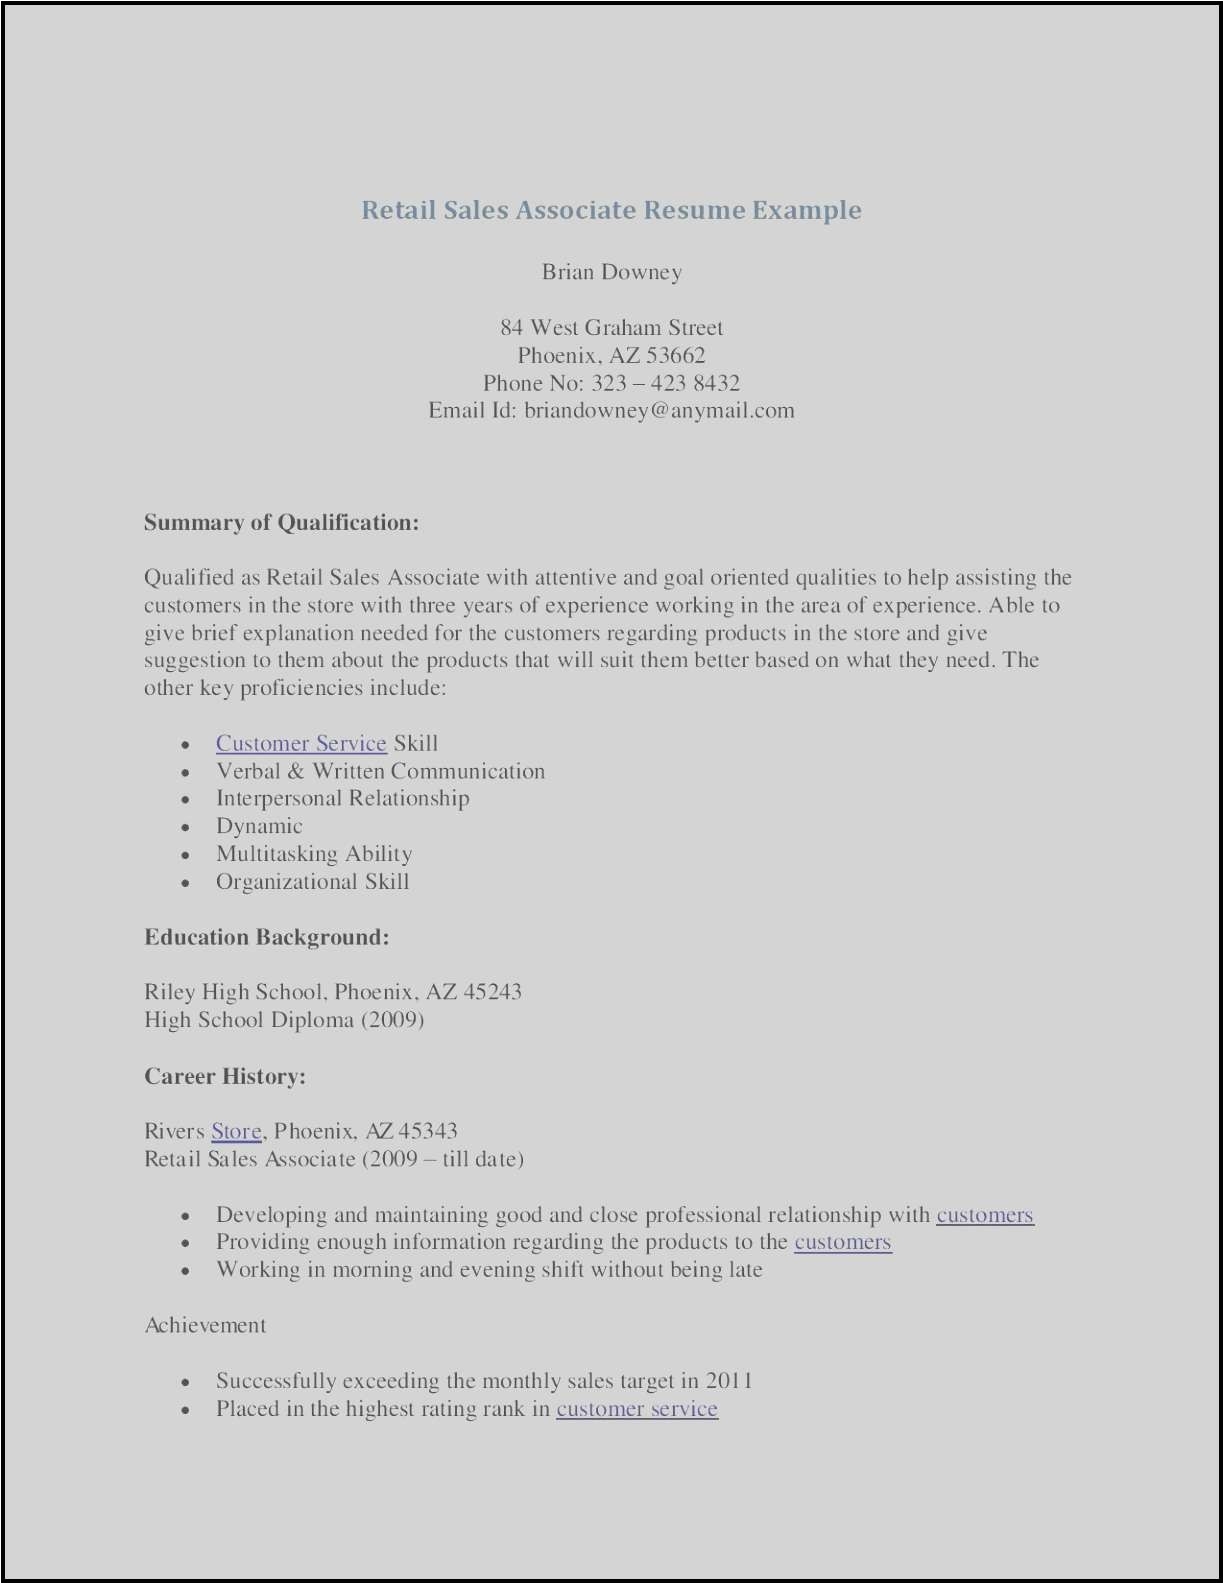 retail sales associate resume examples comfortable resume for retail resume for retail store fresh retail resume 0d